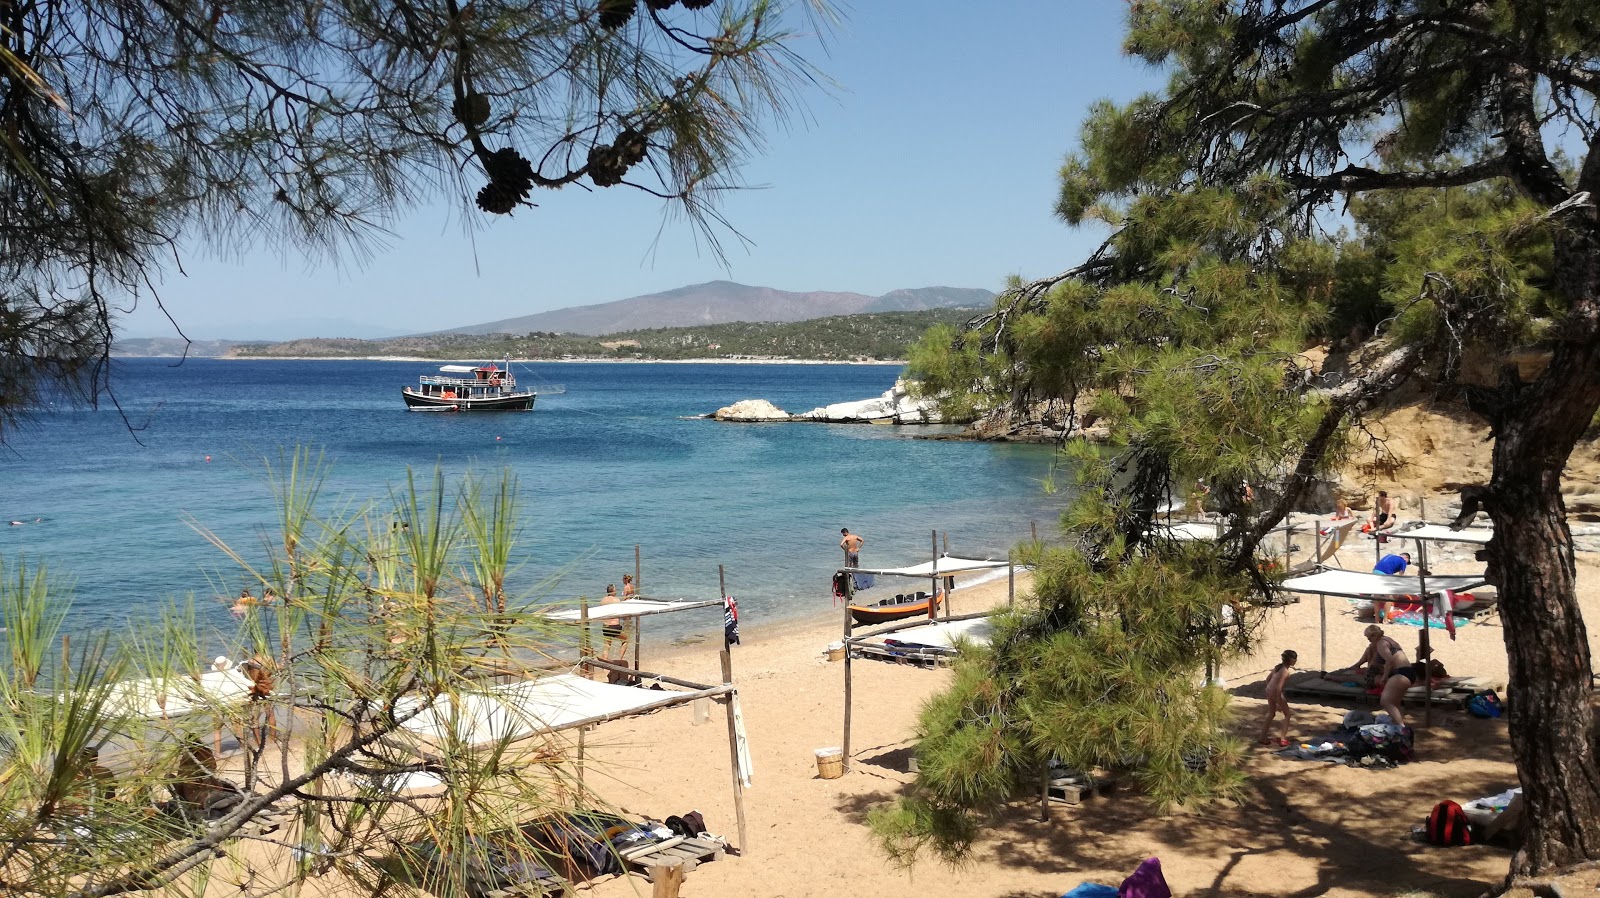 Foto de Salonikios beach ubicado en área natural